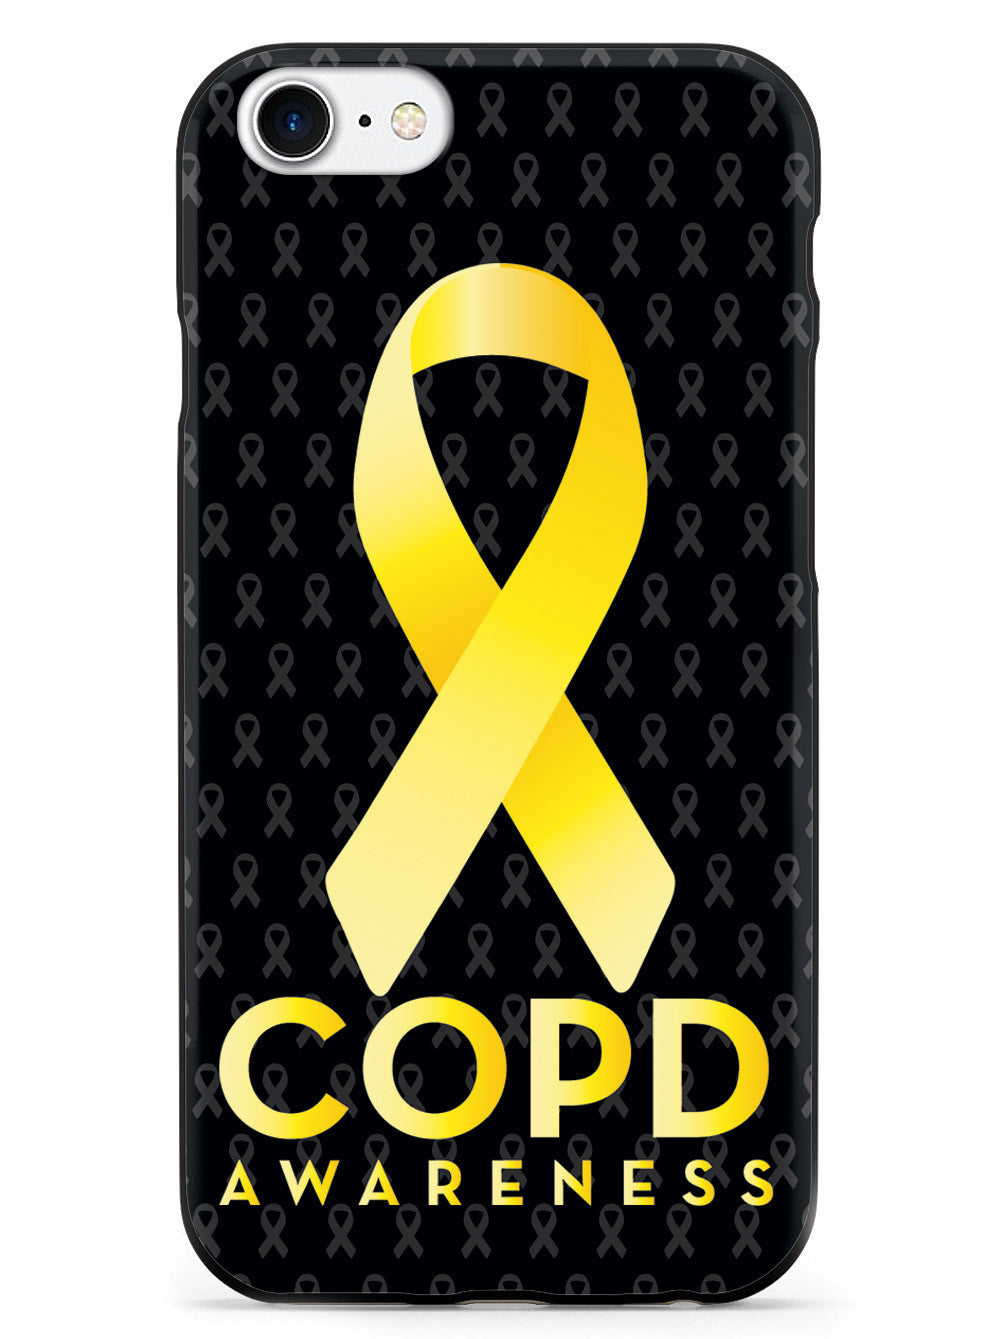 COPD Awareness - Black Case